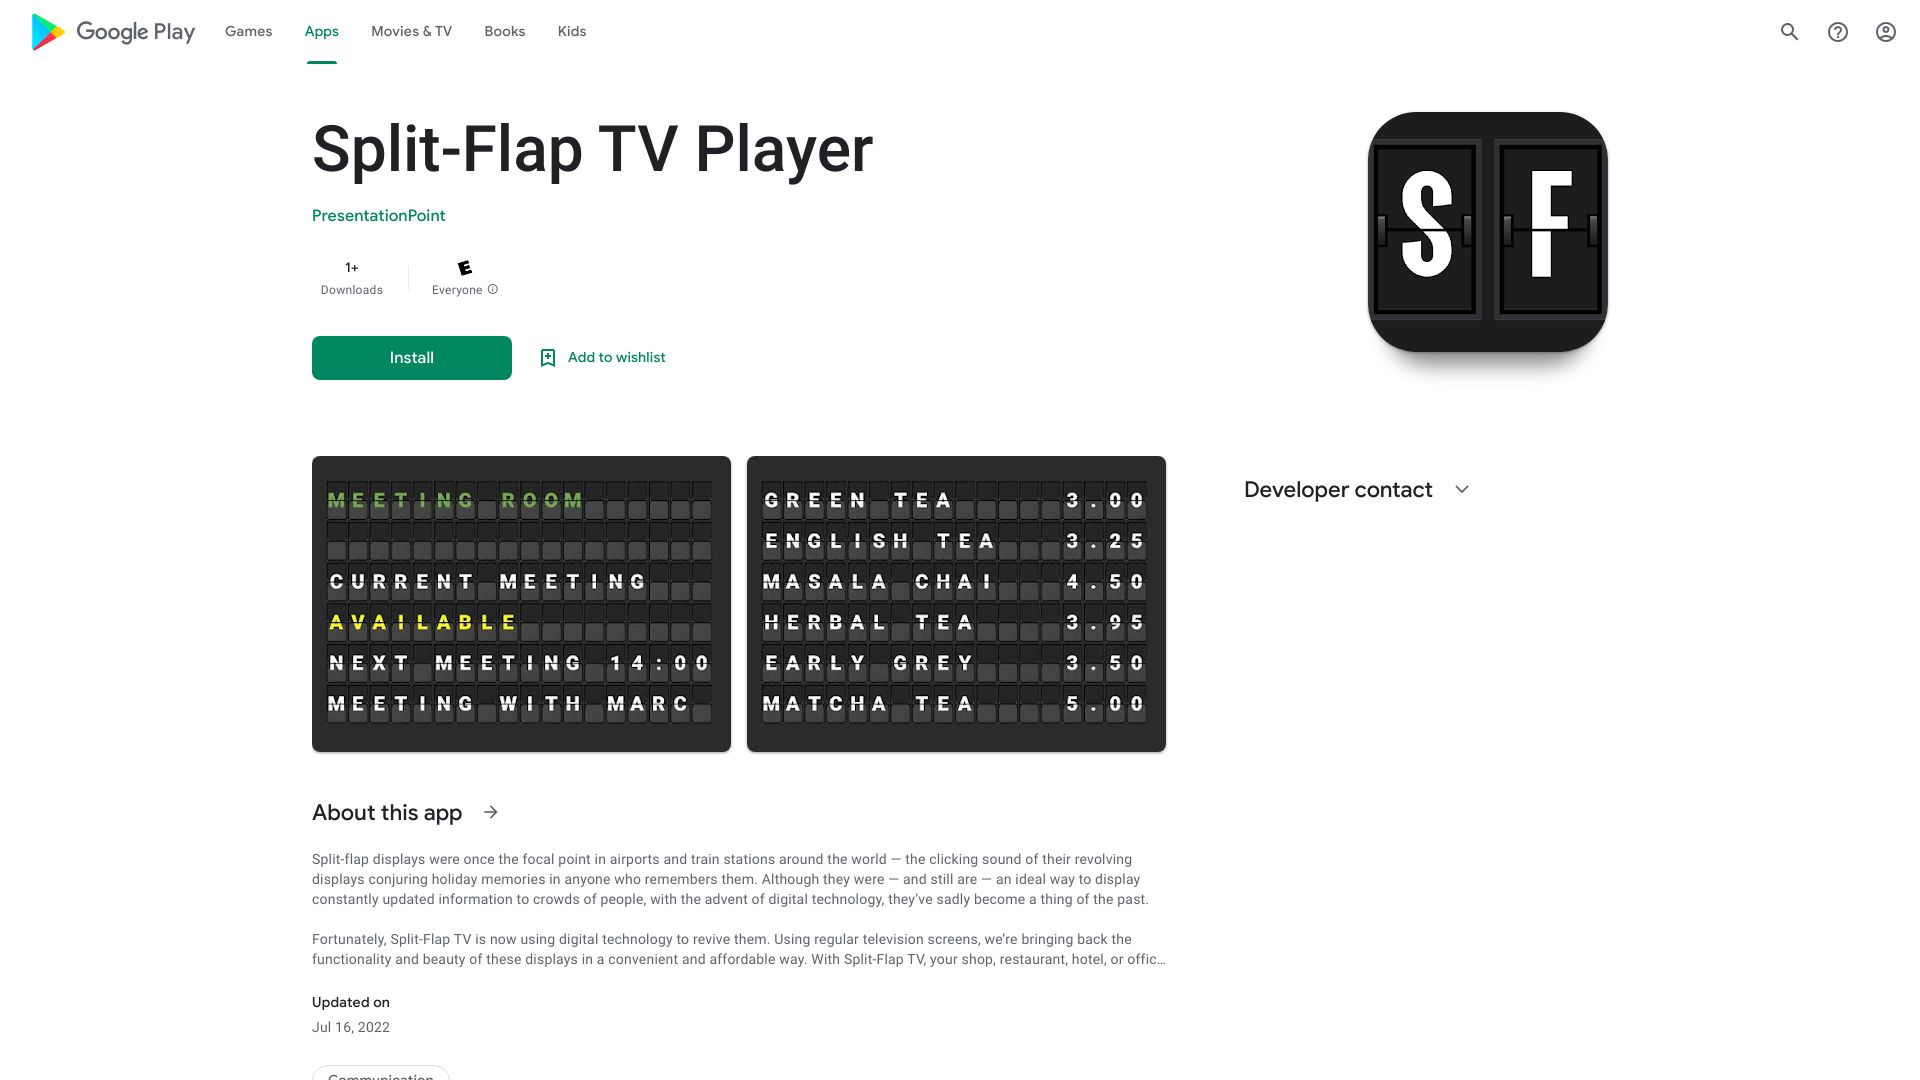 Split-Flap TV Player app on Google Play store